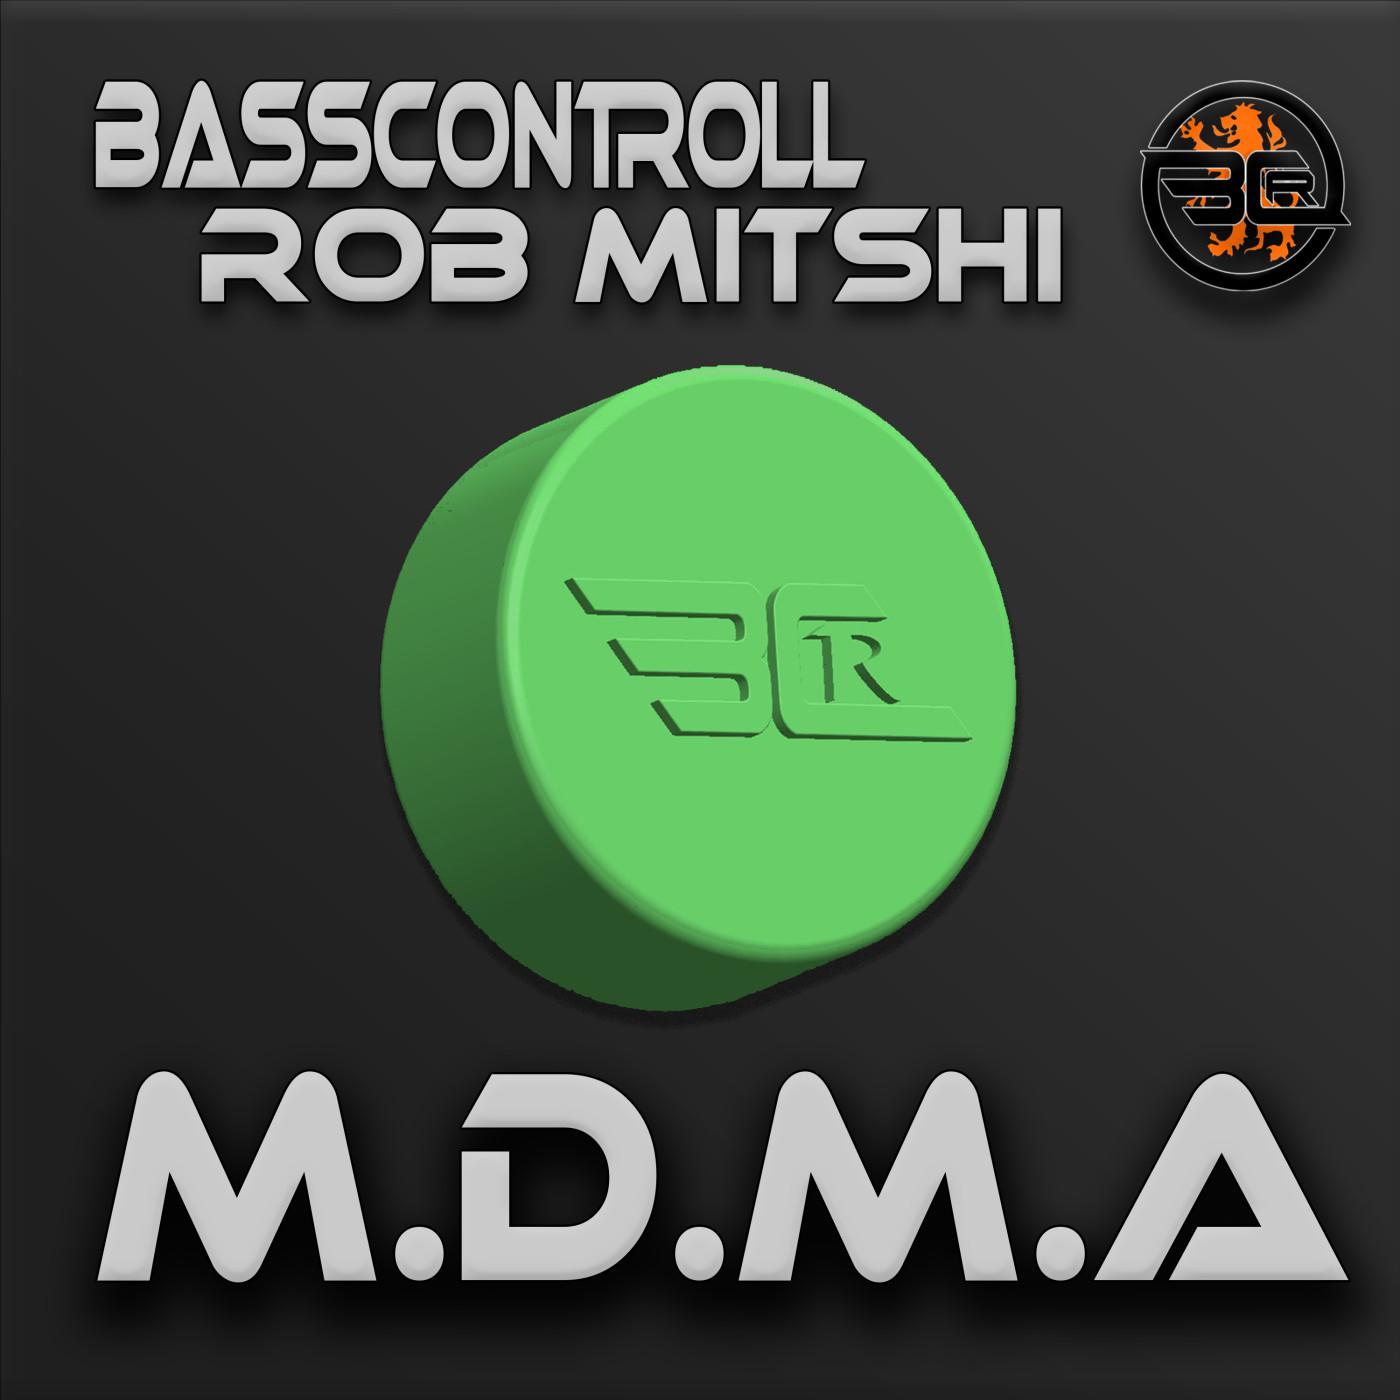 Basscontroll - M.D.M.A. (Rob Mitshi Remix)